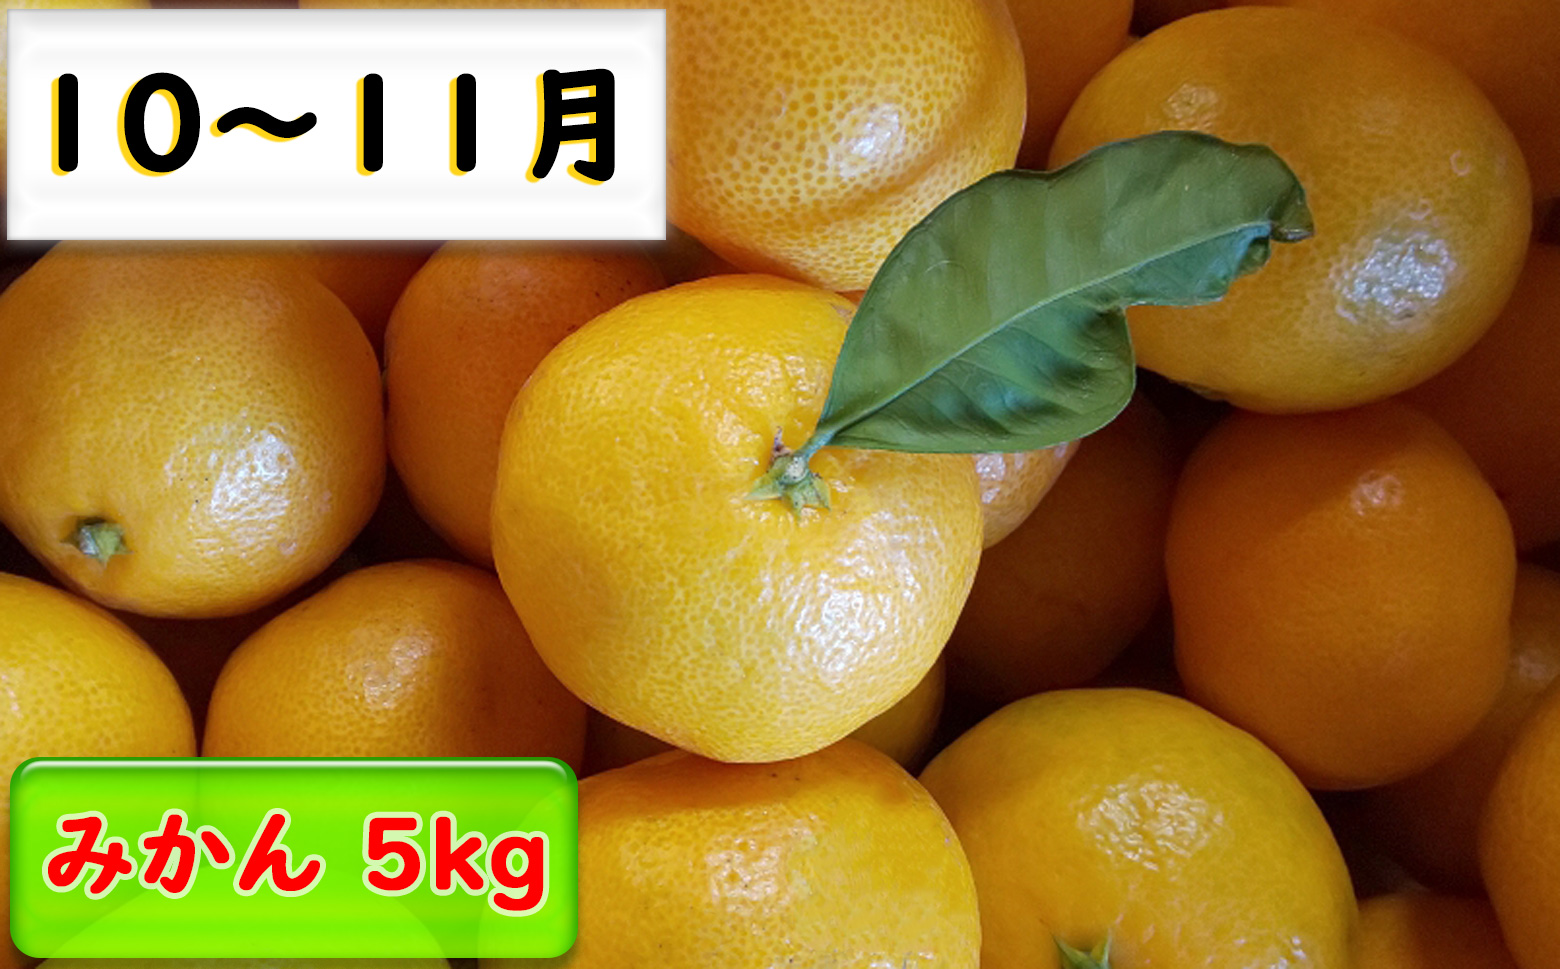 M-DH4.【年４回 季節の果物をお届け】 季節の果物定期便